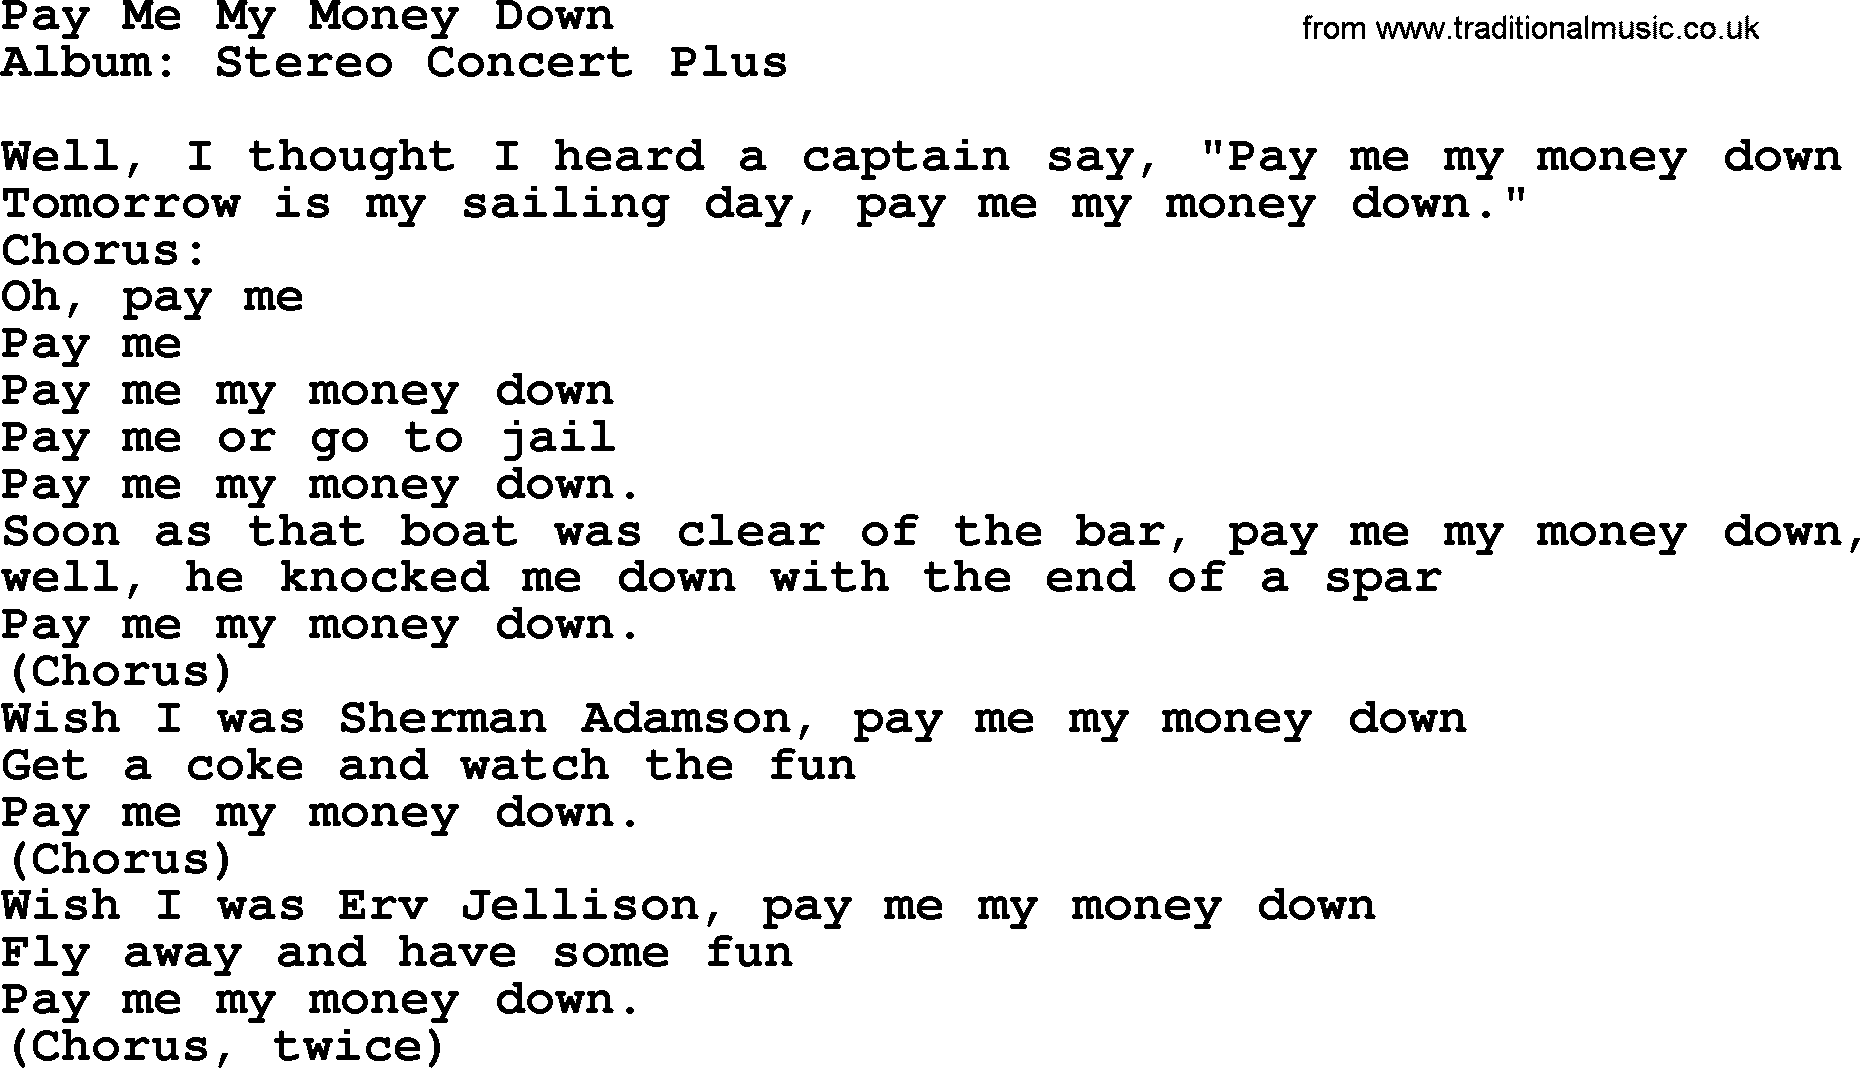 Kingston Trio song Pay Me My Money Down, lyrics